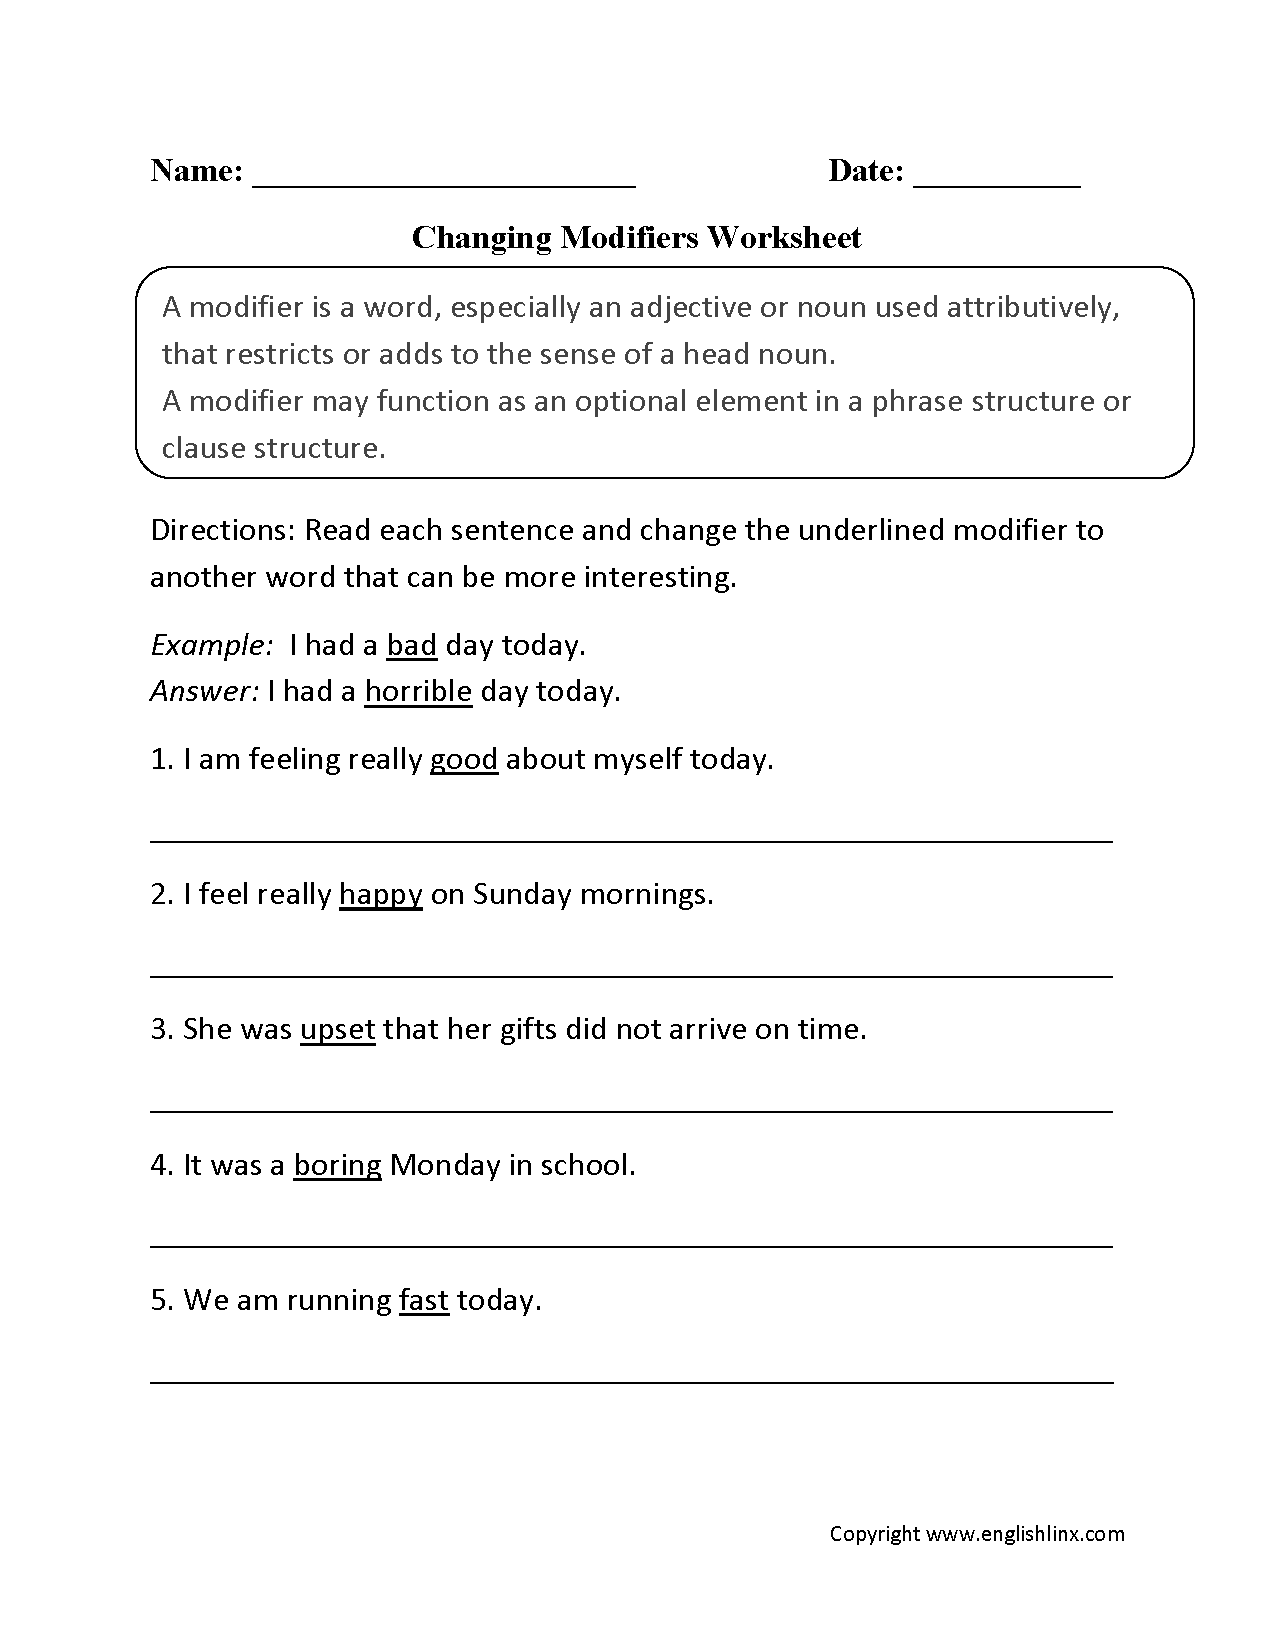 grammar-worksheets-word-usage-worksheets